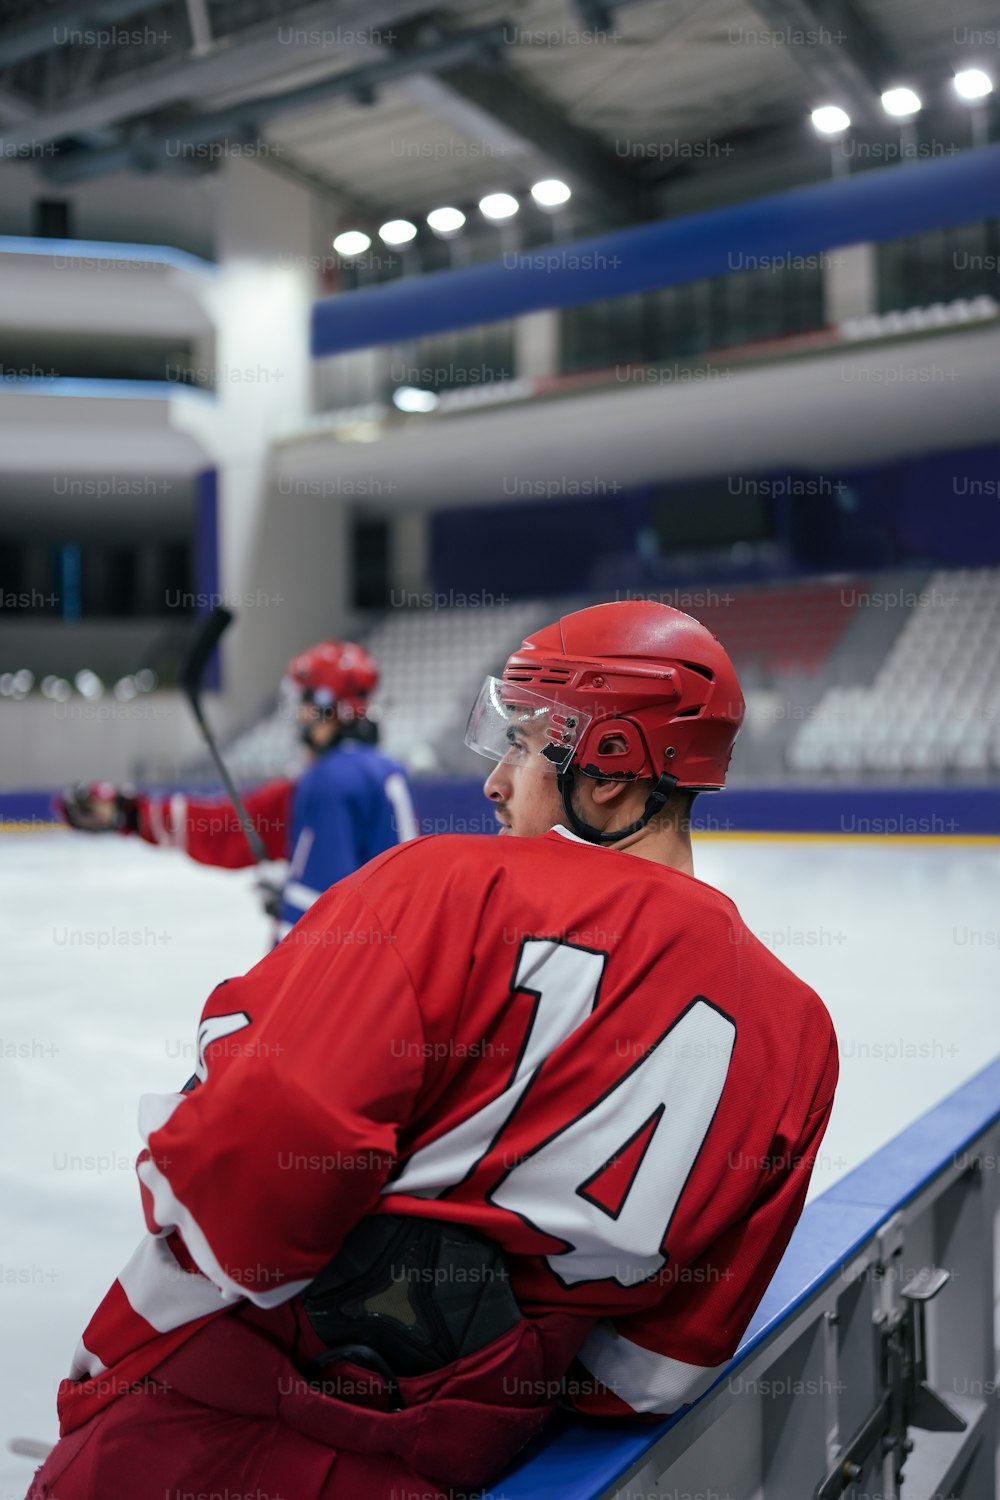 a man sitting on a bench wearing a red hockey uniform